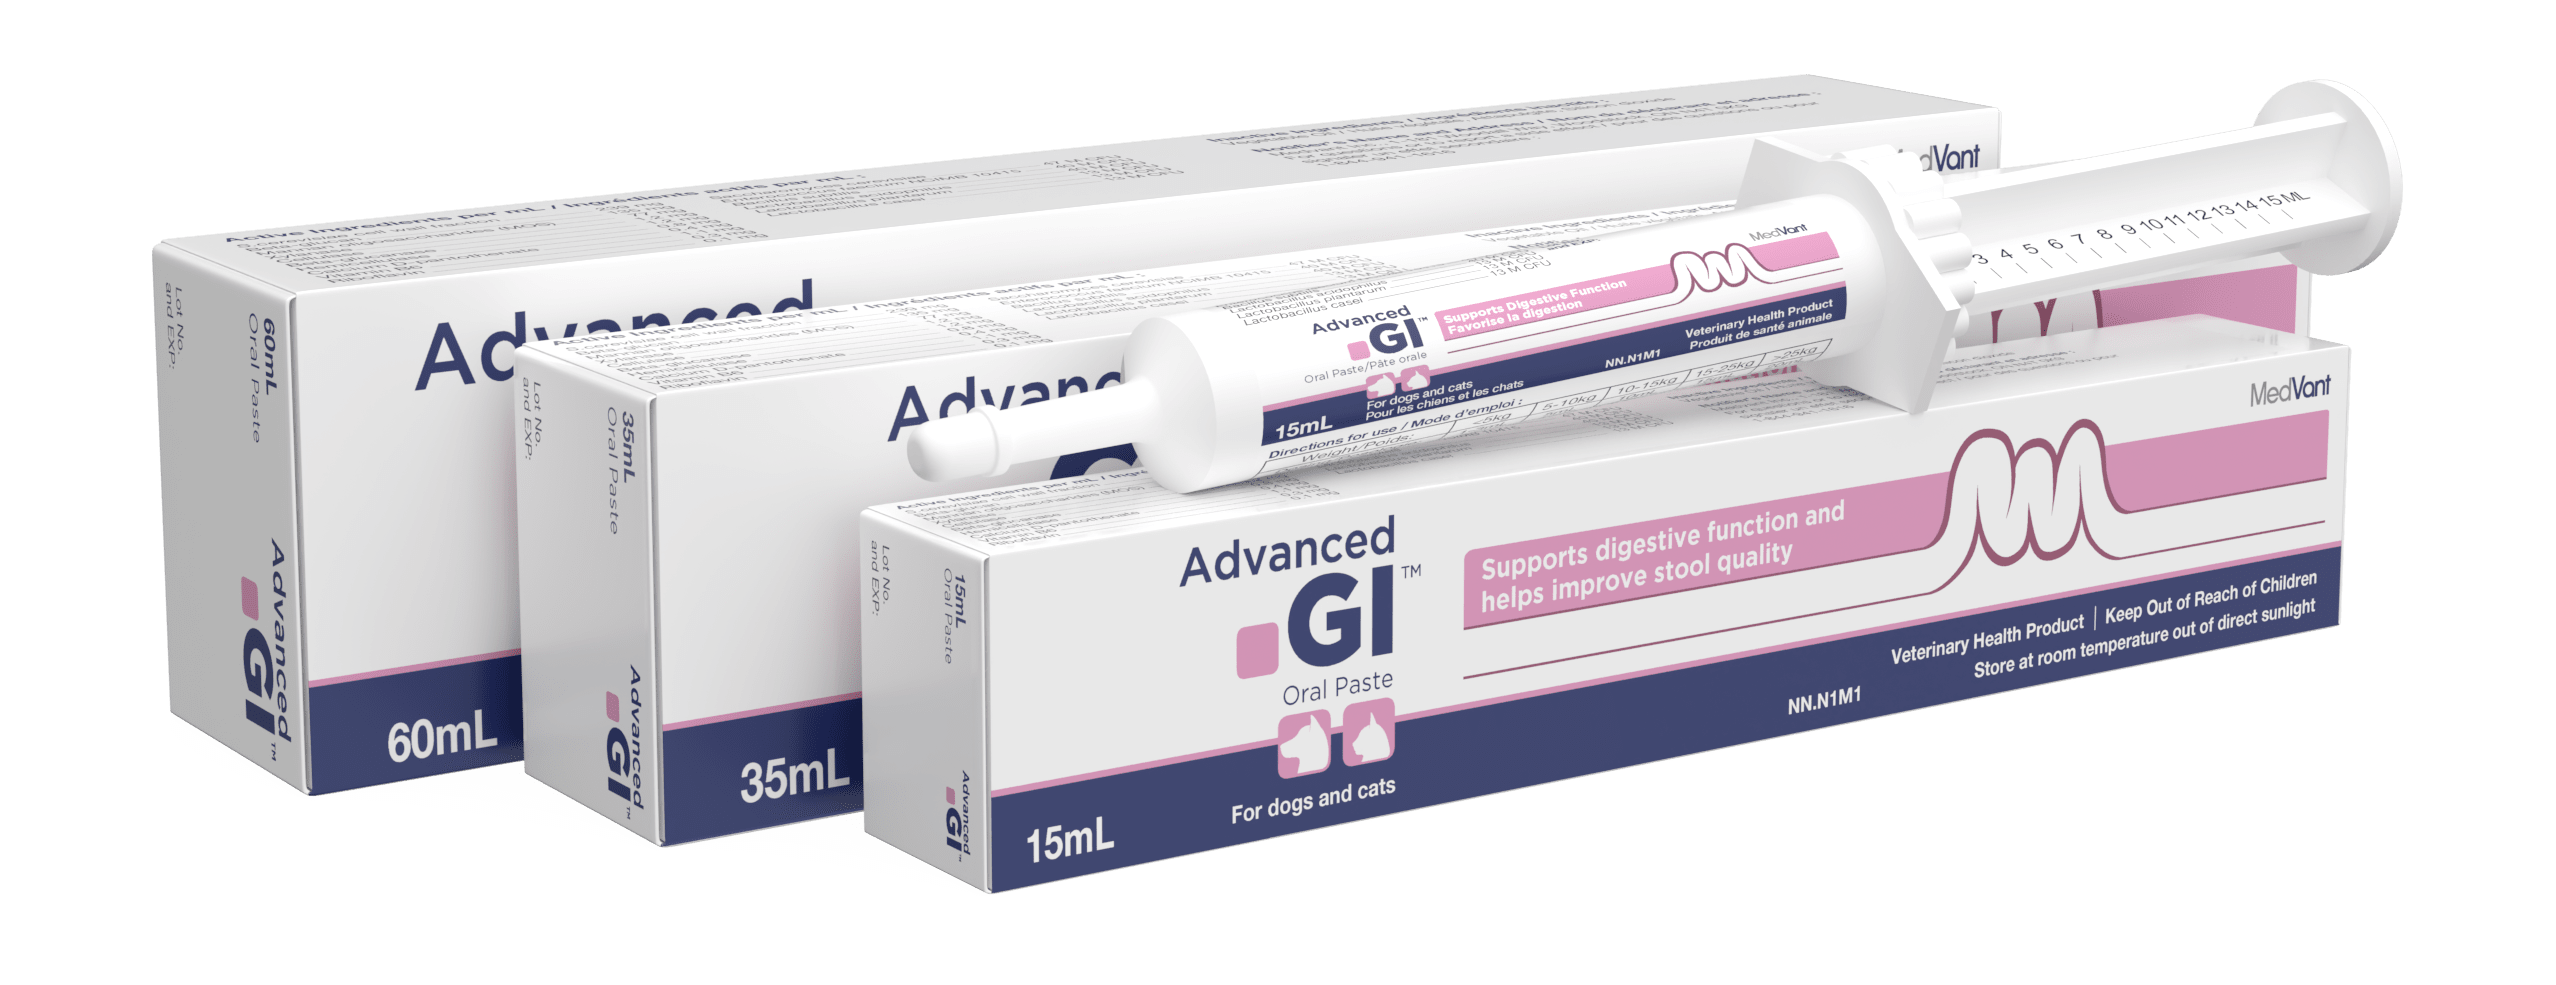 Advanced GI Paste Product Family